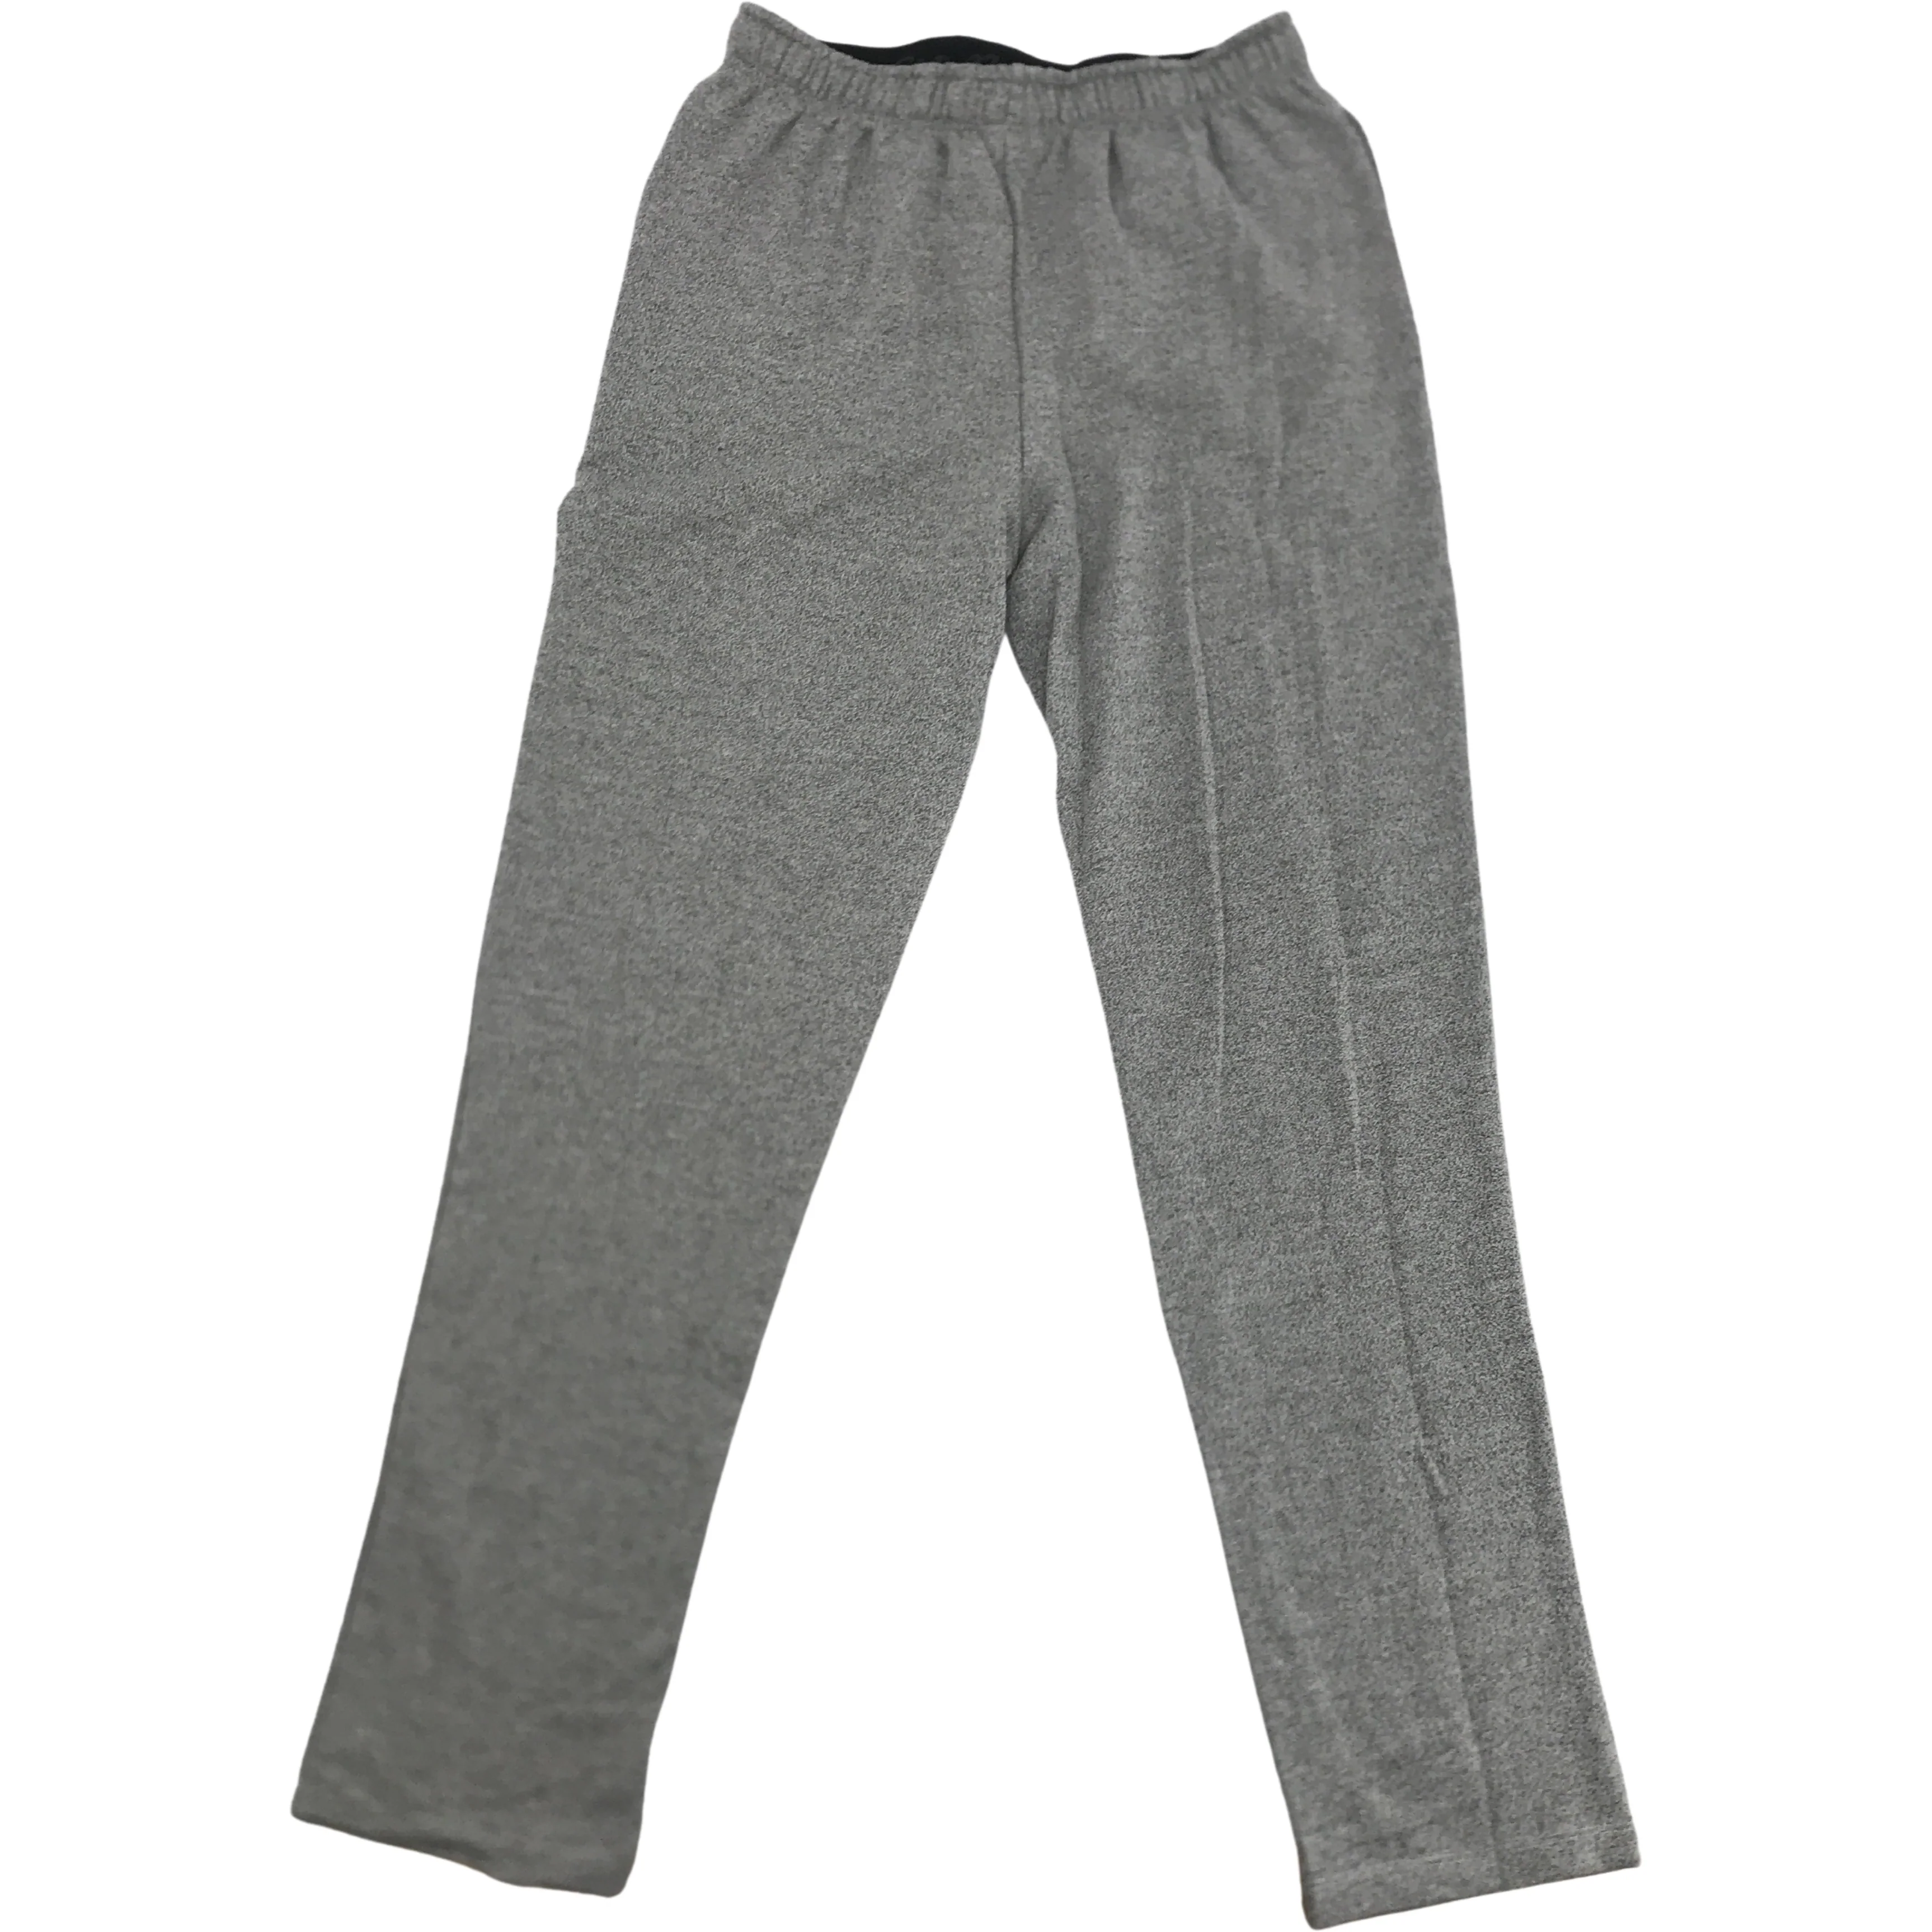 Eddie Bauer Men's Sweatpants: Men's Joggers / Grey / Small